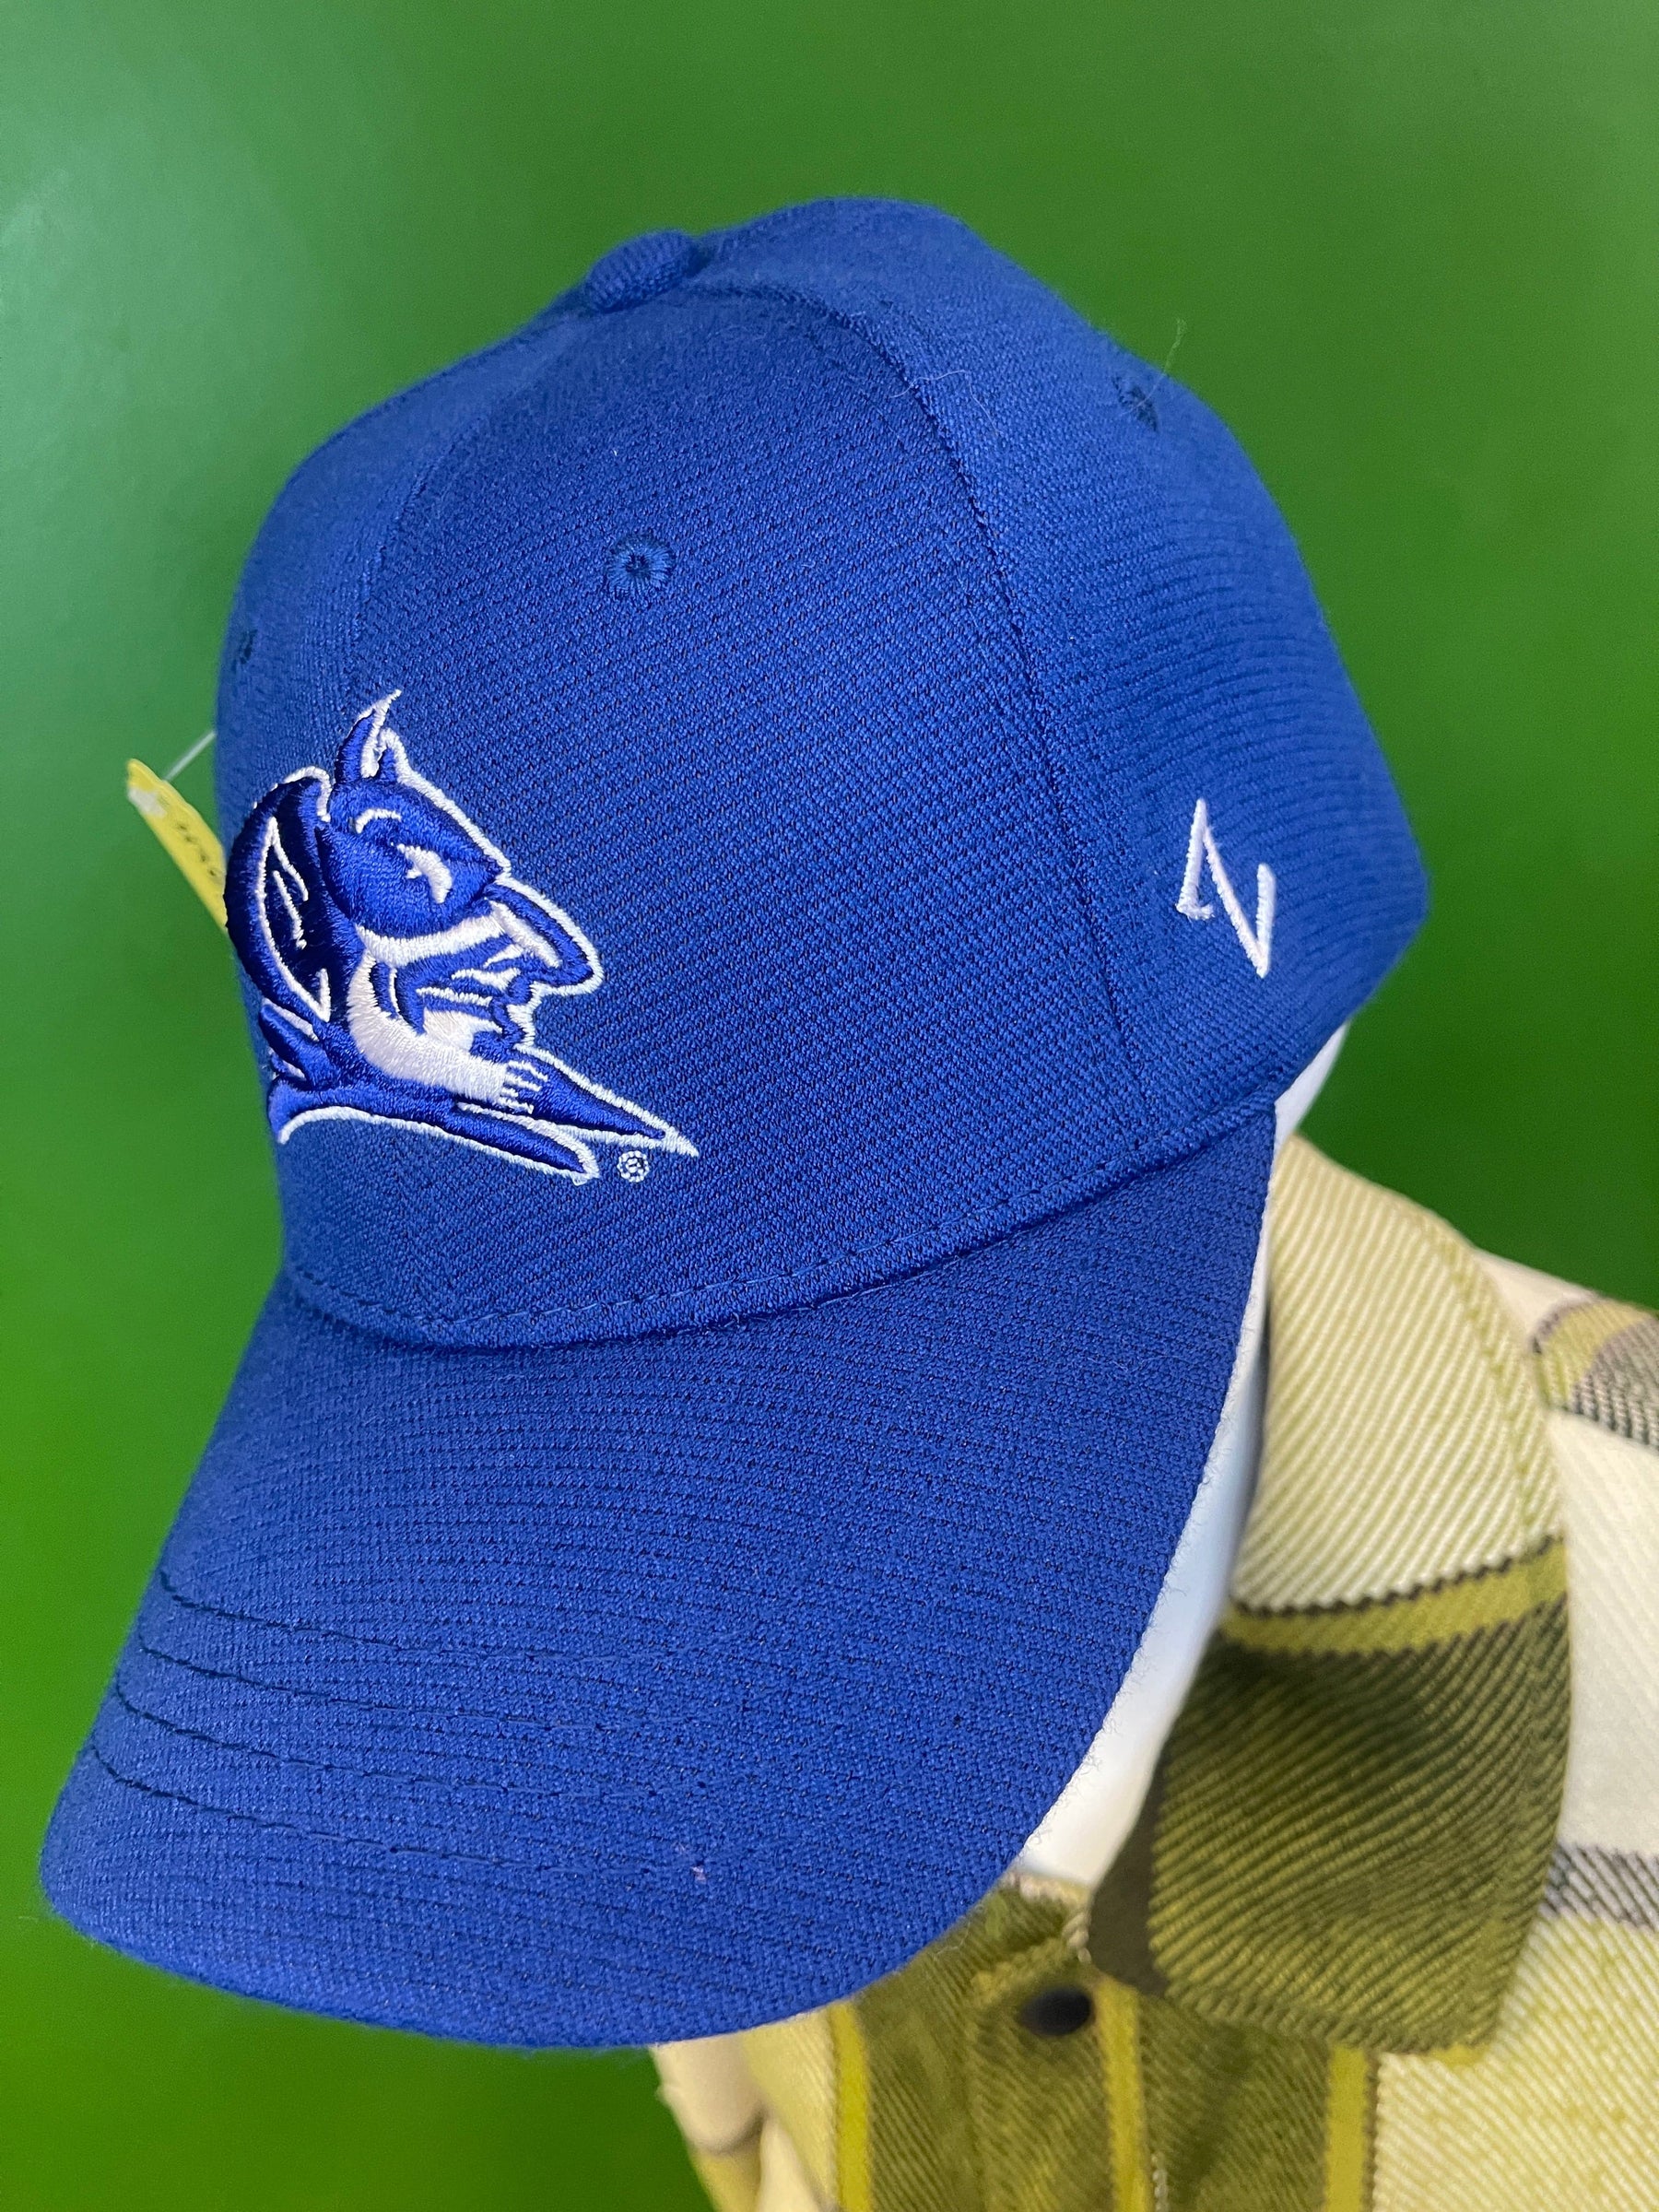 NCAA Duke Blue Devils Zephyr Hat/Cap Youth OSFM